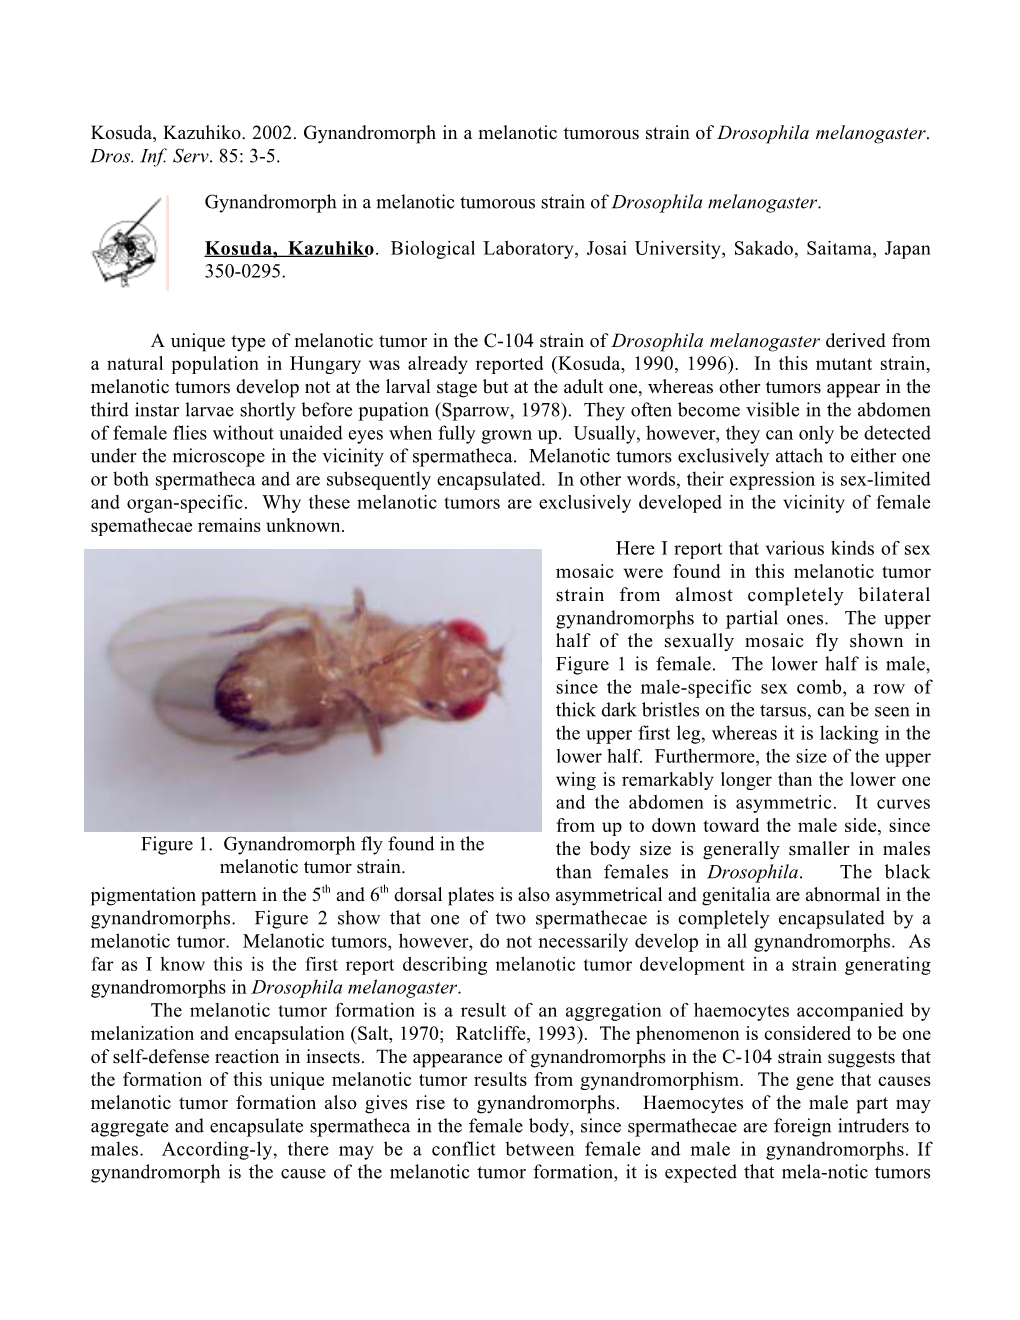 Kosuda, Kazuhiko. 2002. Gynandromorph in a Melanotic Tumorous Strain of Drosophila Melanogaster